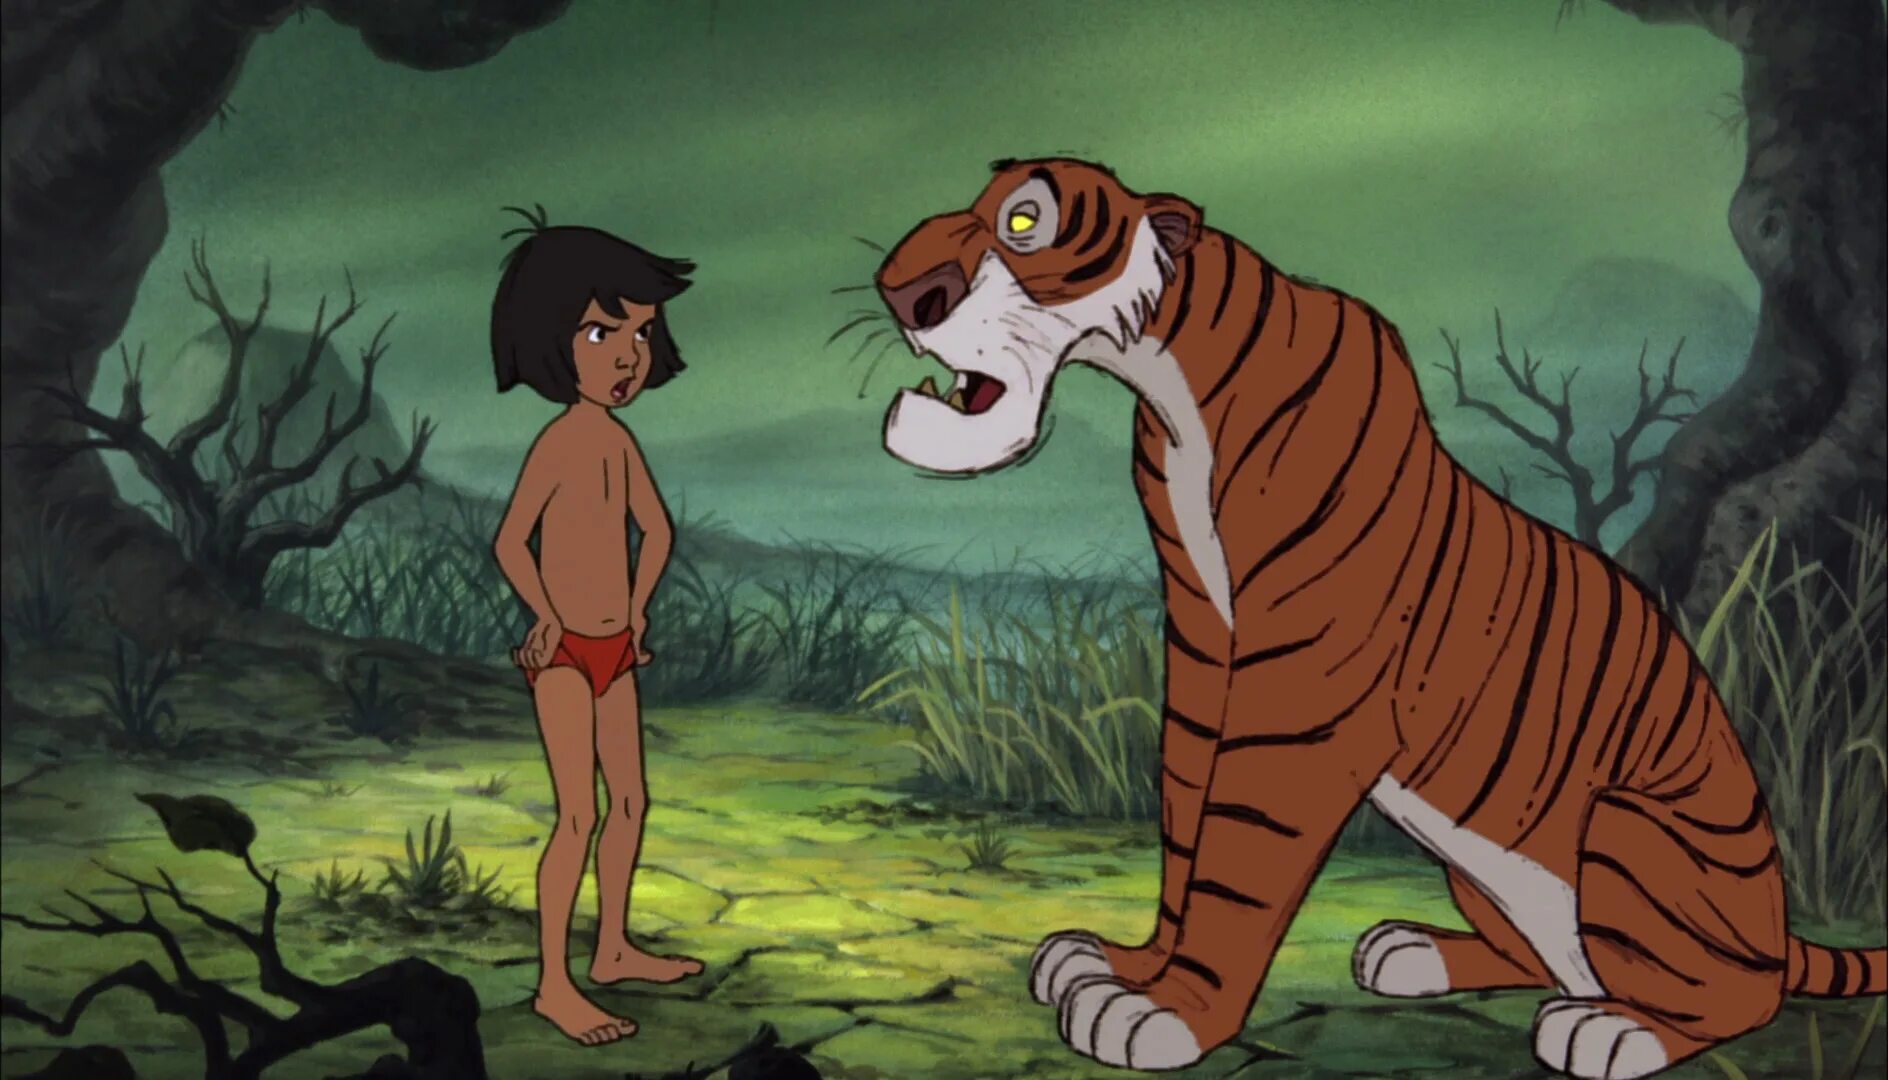 Мои любимые герои мультфильмов шрек пумба маугли. Шерхан Маугли Дисней. Тигр Шерхан и Маугли. Шерхан тигр из мультика Маугли.